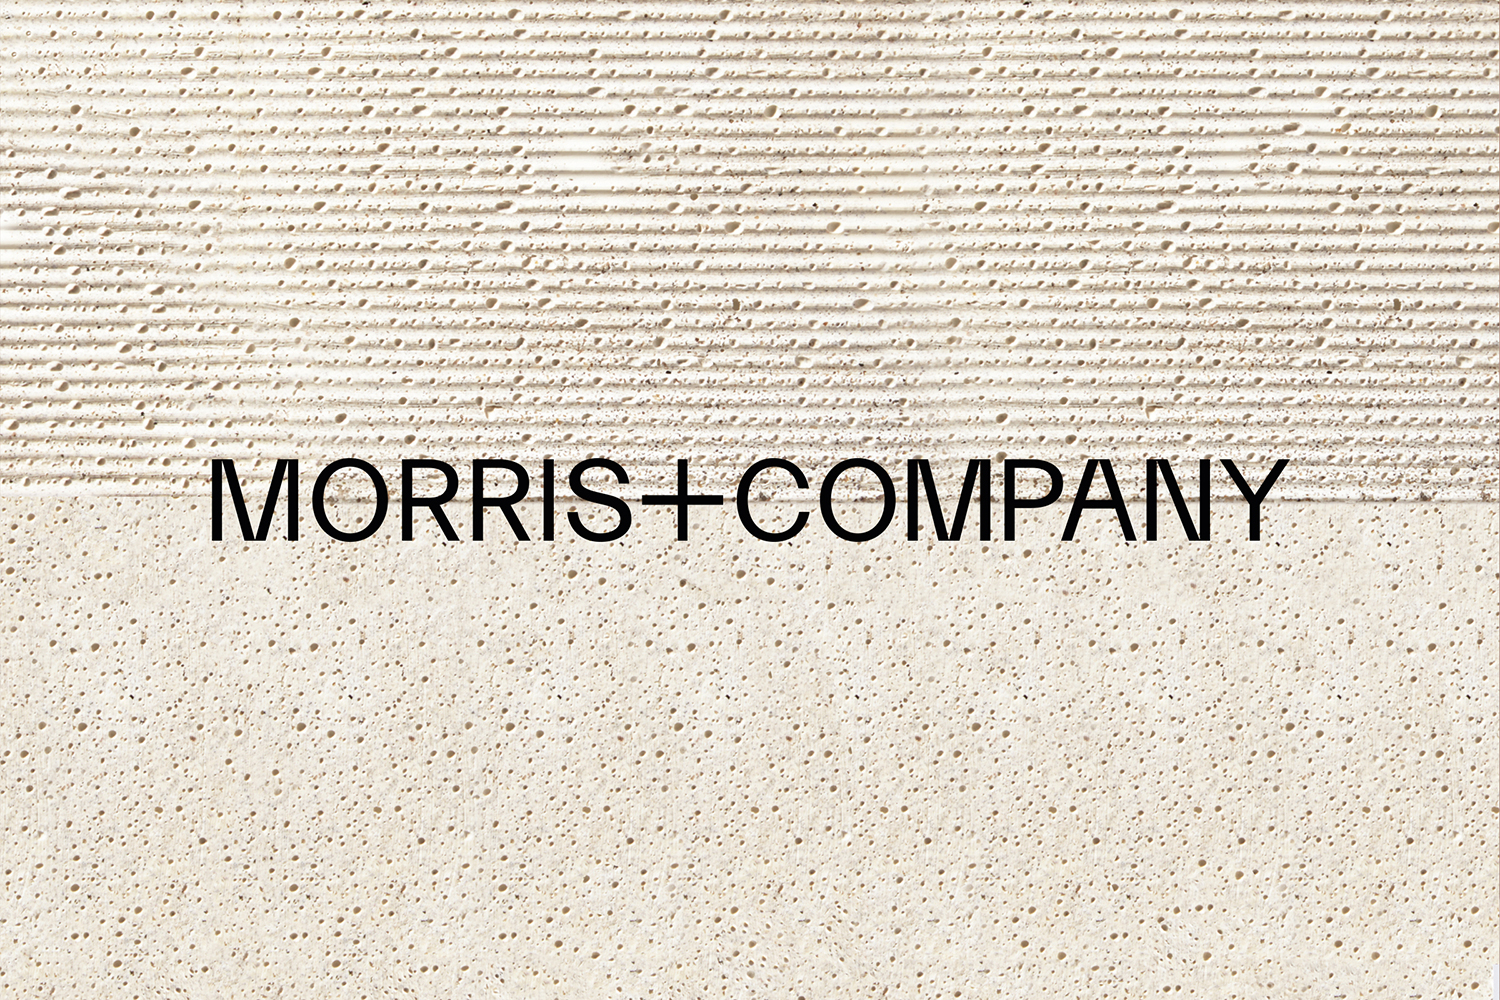 British Design – Morris+Company by Bob Design, London